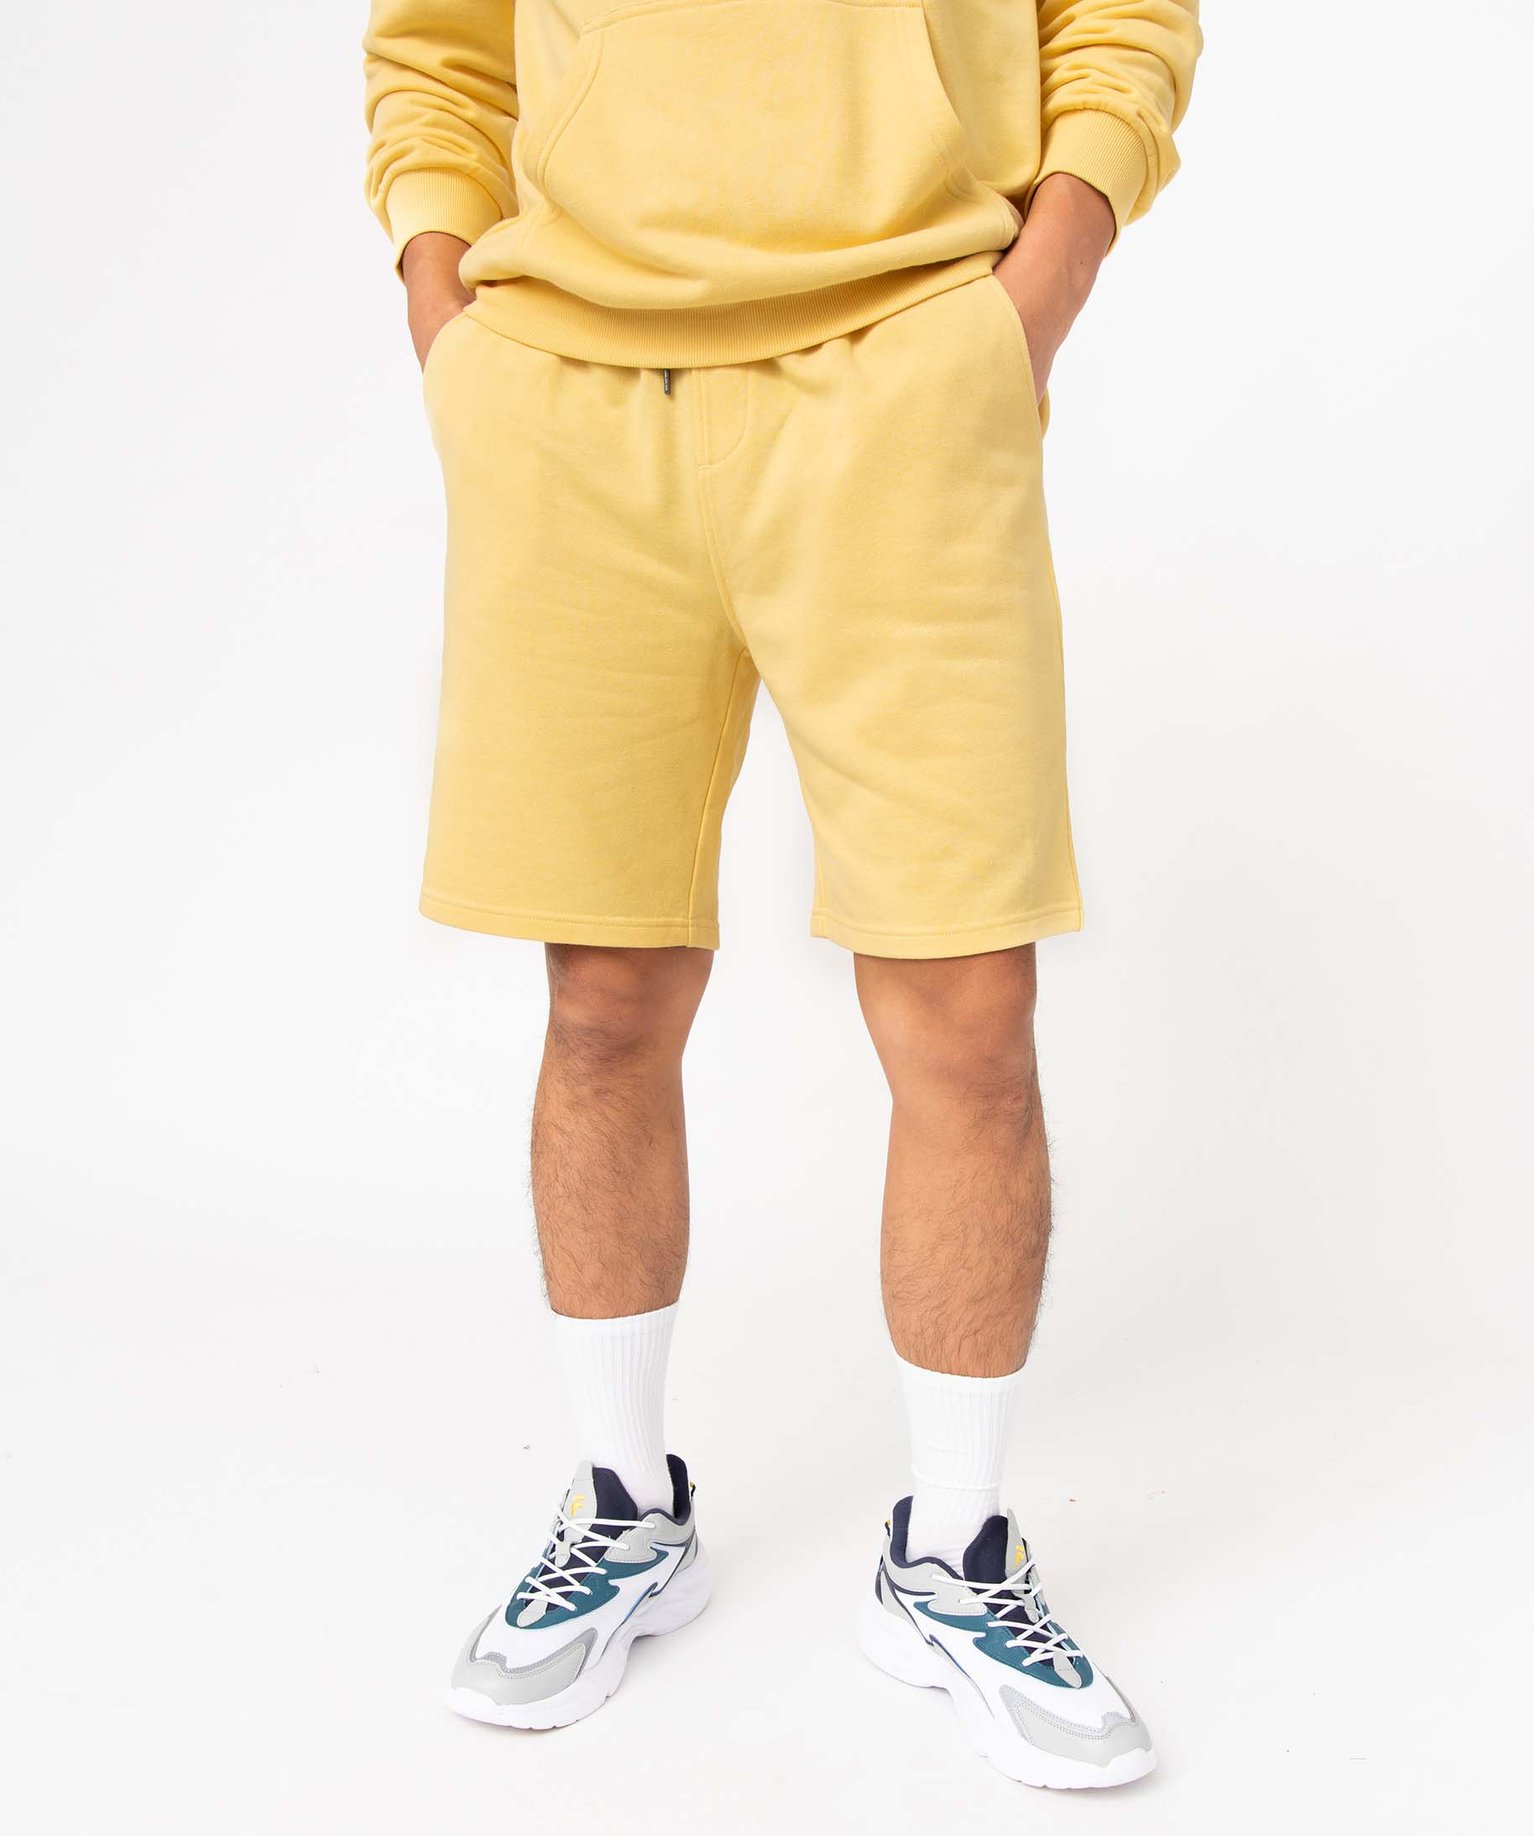 bermuda homme en maille avec ceinture ajustable jaune